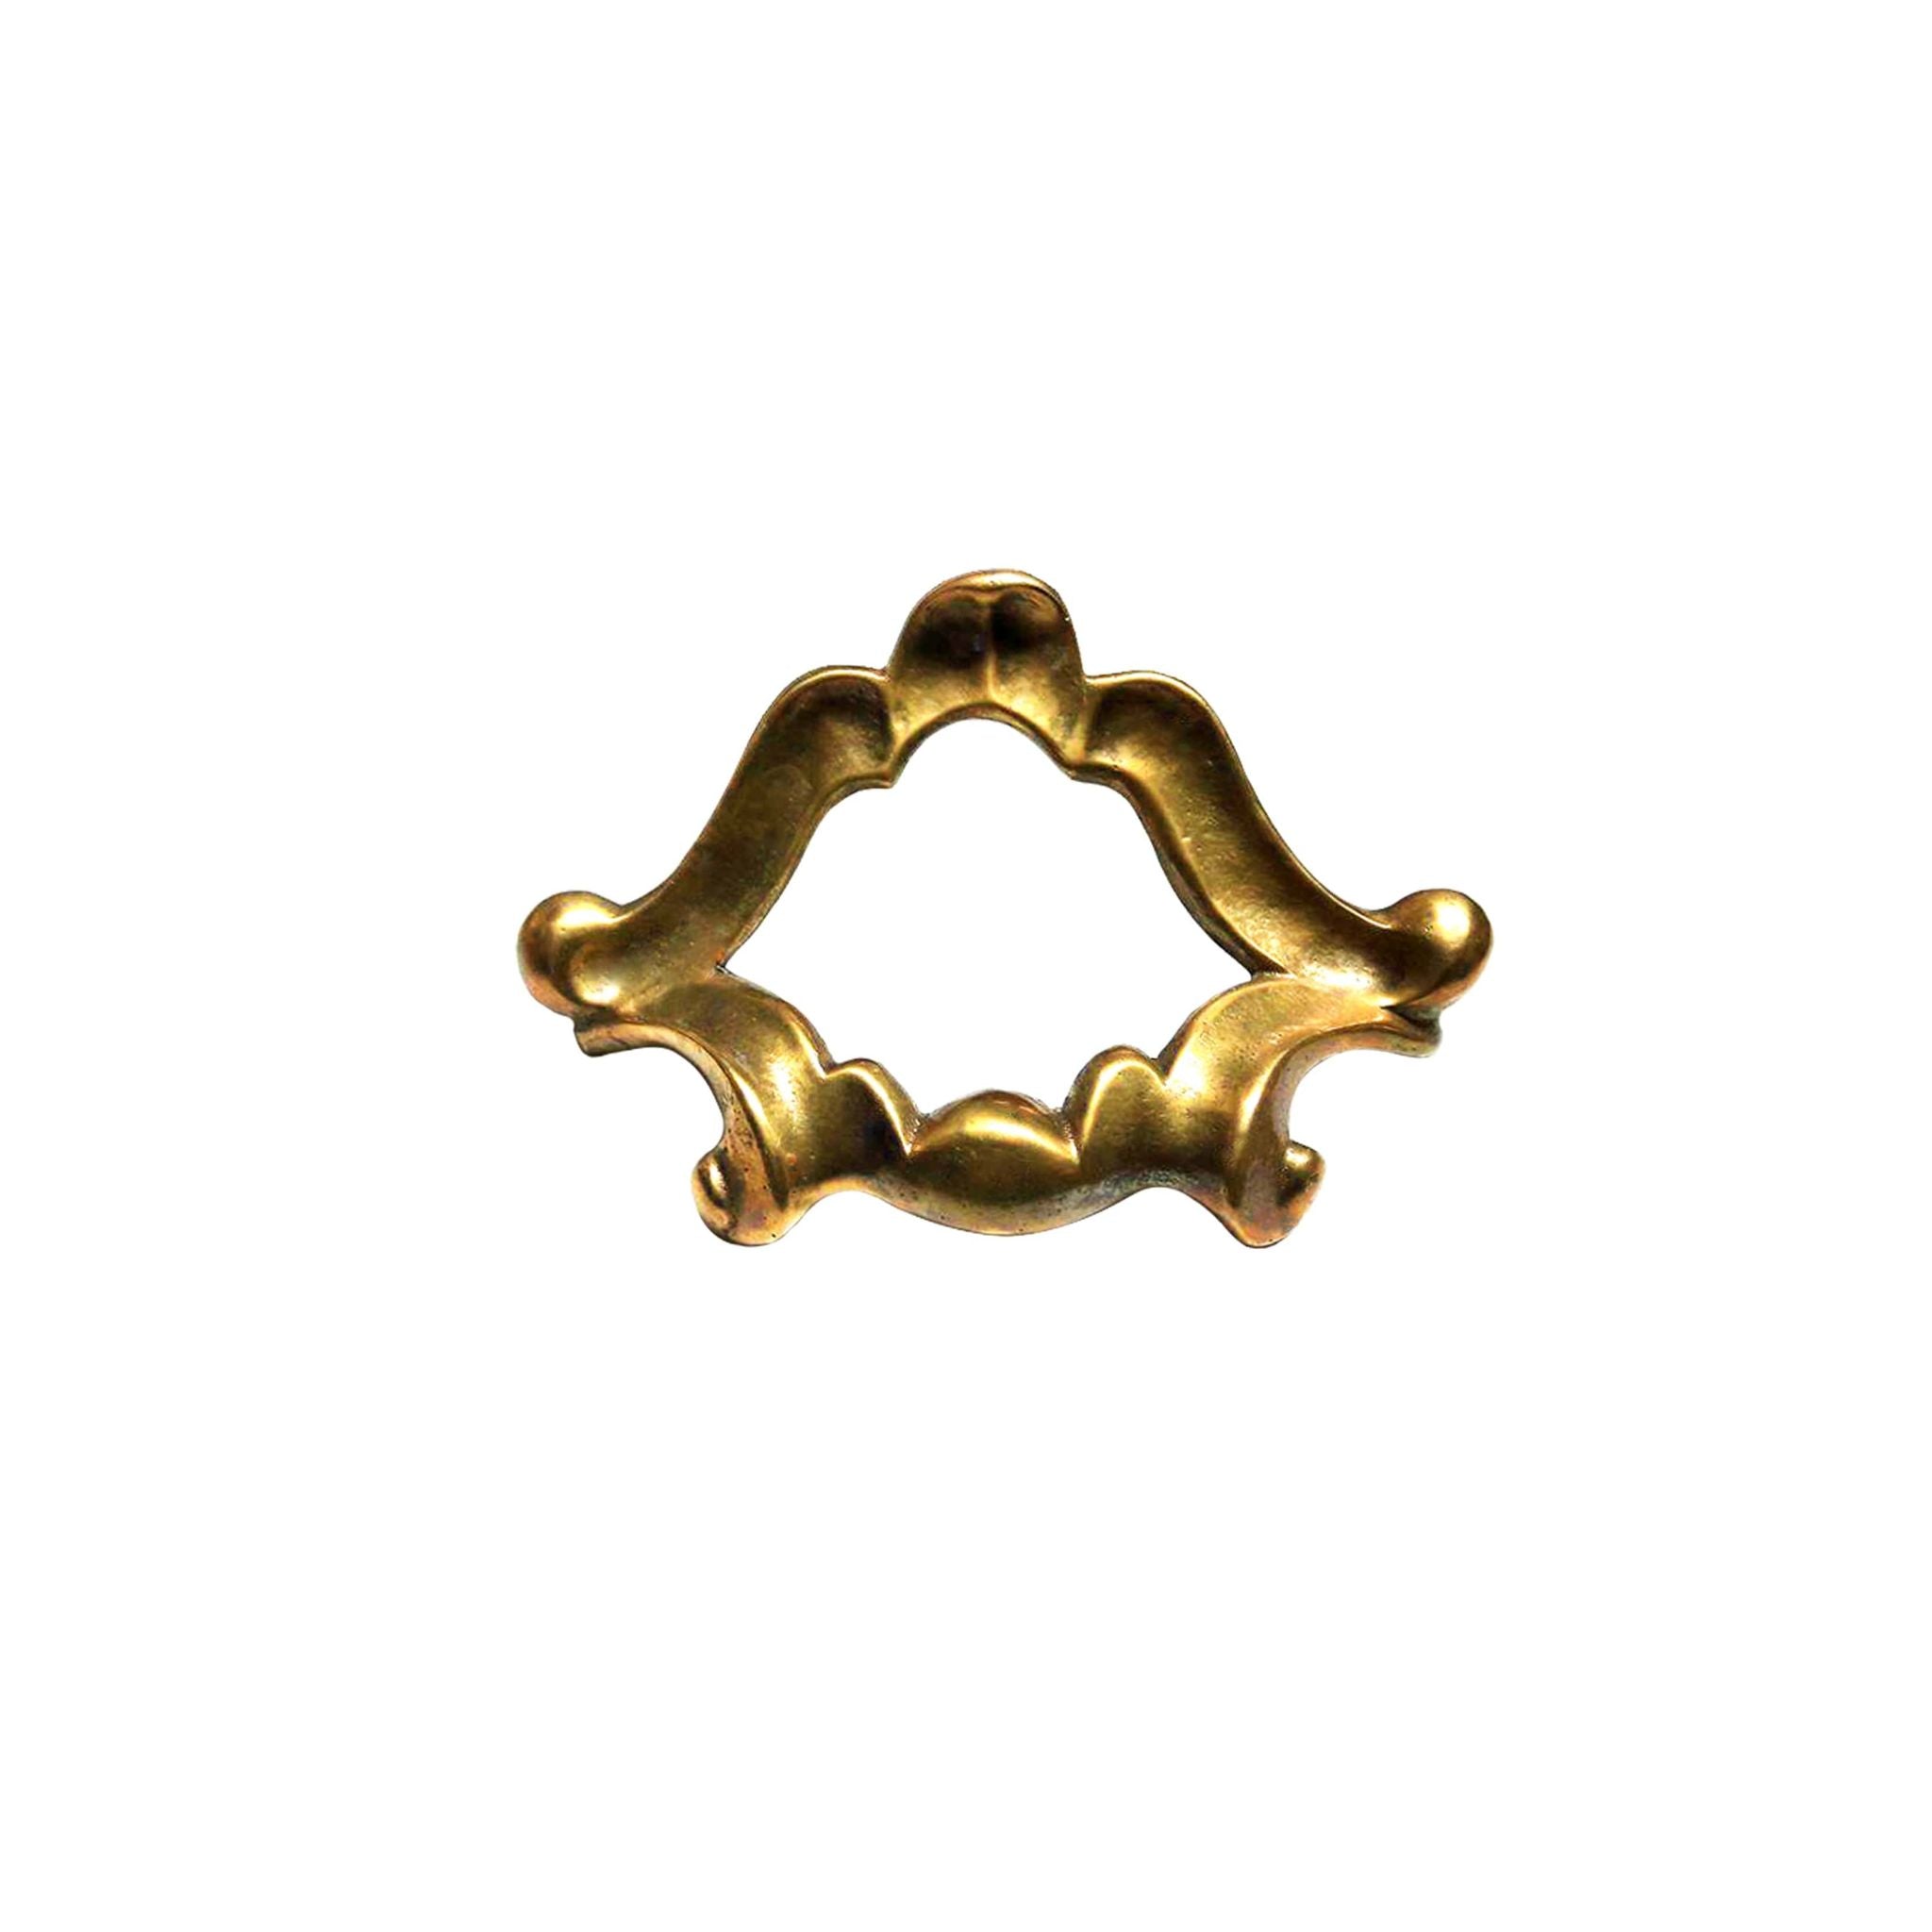 Novecento Vienna Brass Knob: A vintage-inspired brass knob, perfect for adding nostalgic charm to your décor.